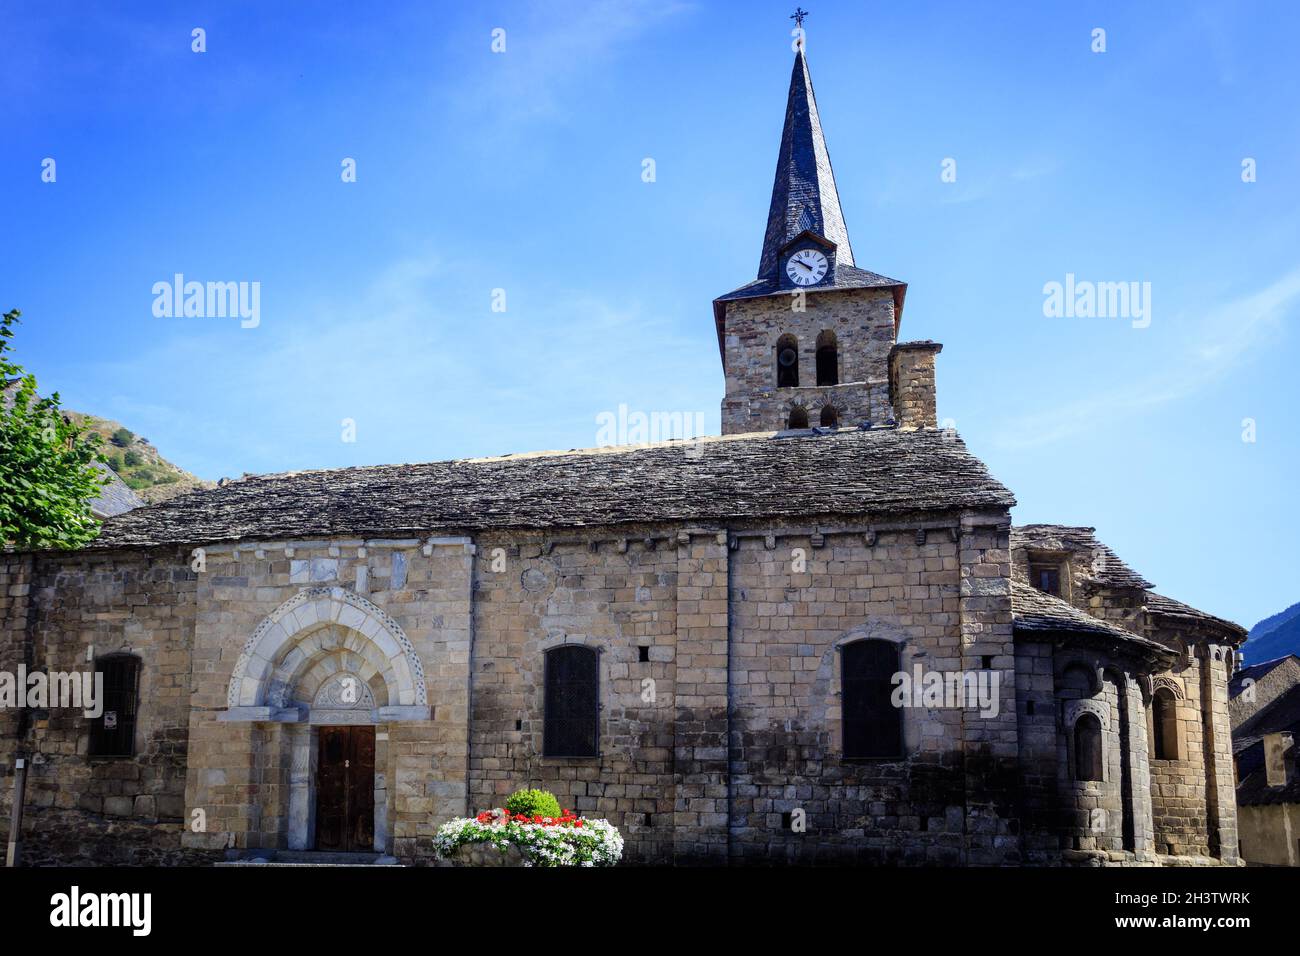 Die romanische Kirche la Asuncion de Maria im Dorf Bossot im Aran-Tal. Katalonien. Spanien. Stockfoto